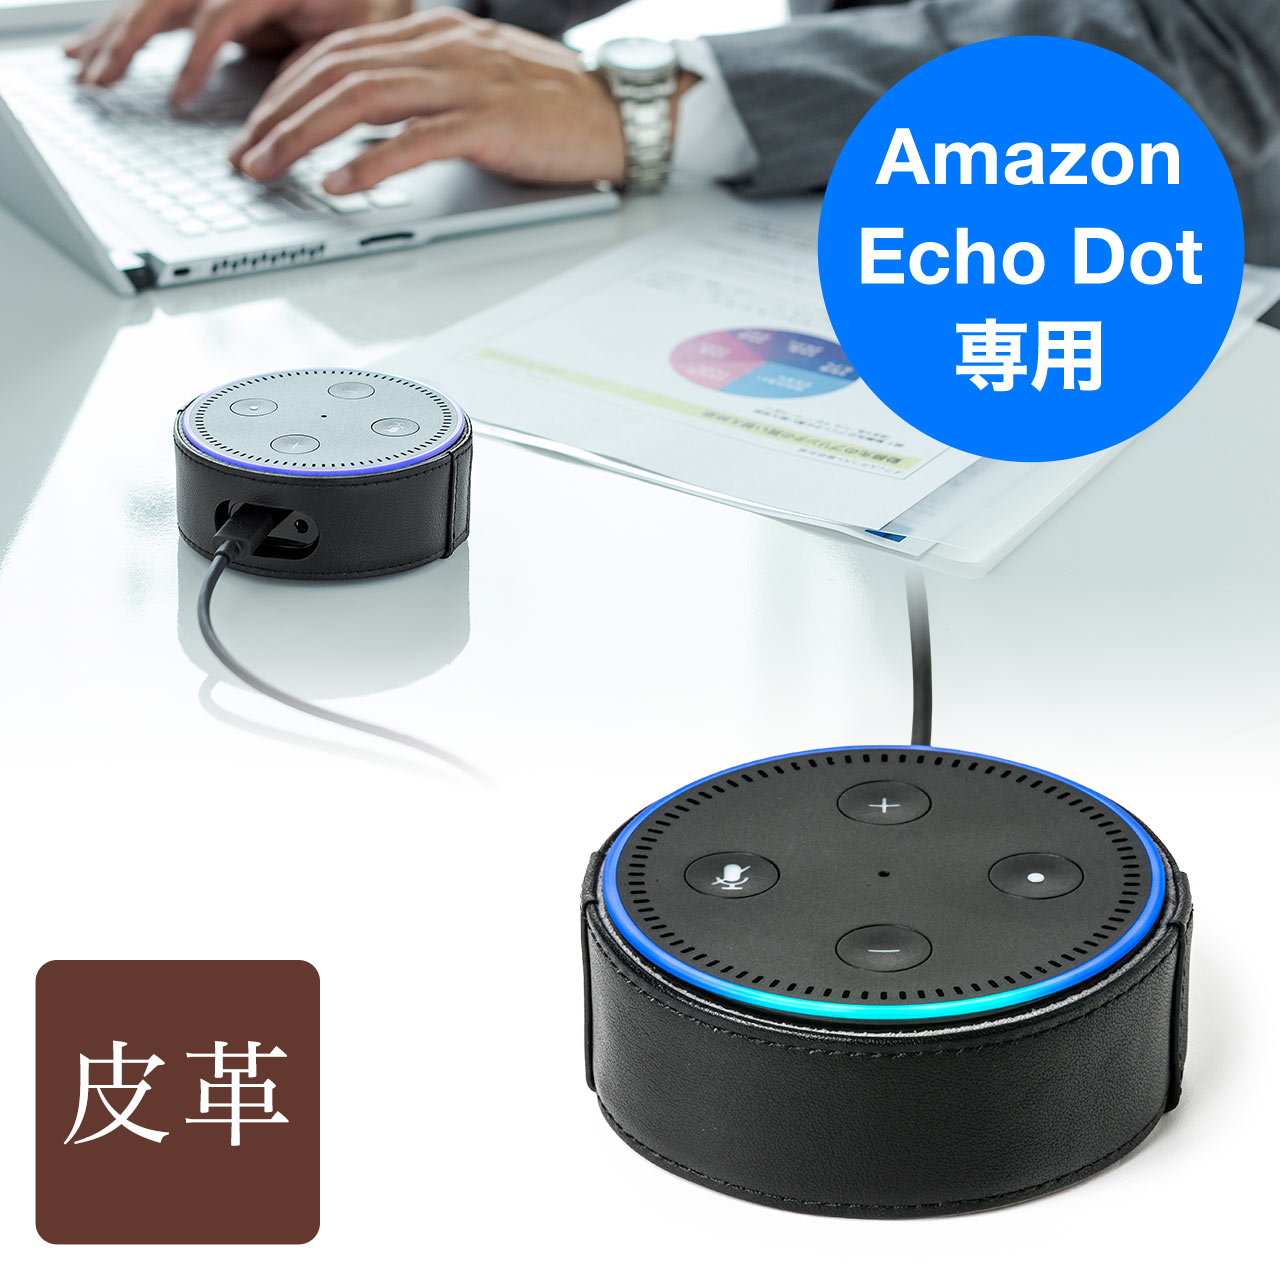 Amazon Echo Dotp{vP[Xi2ndf/2017NfpEubNj 200-CASE001BK